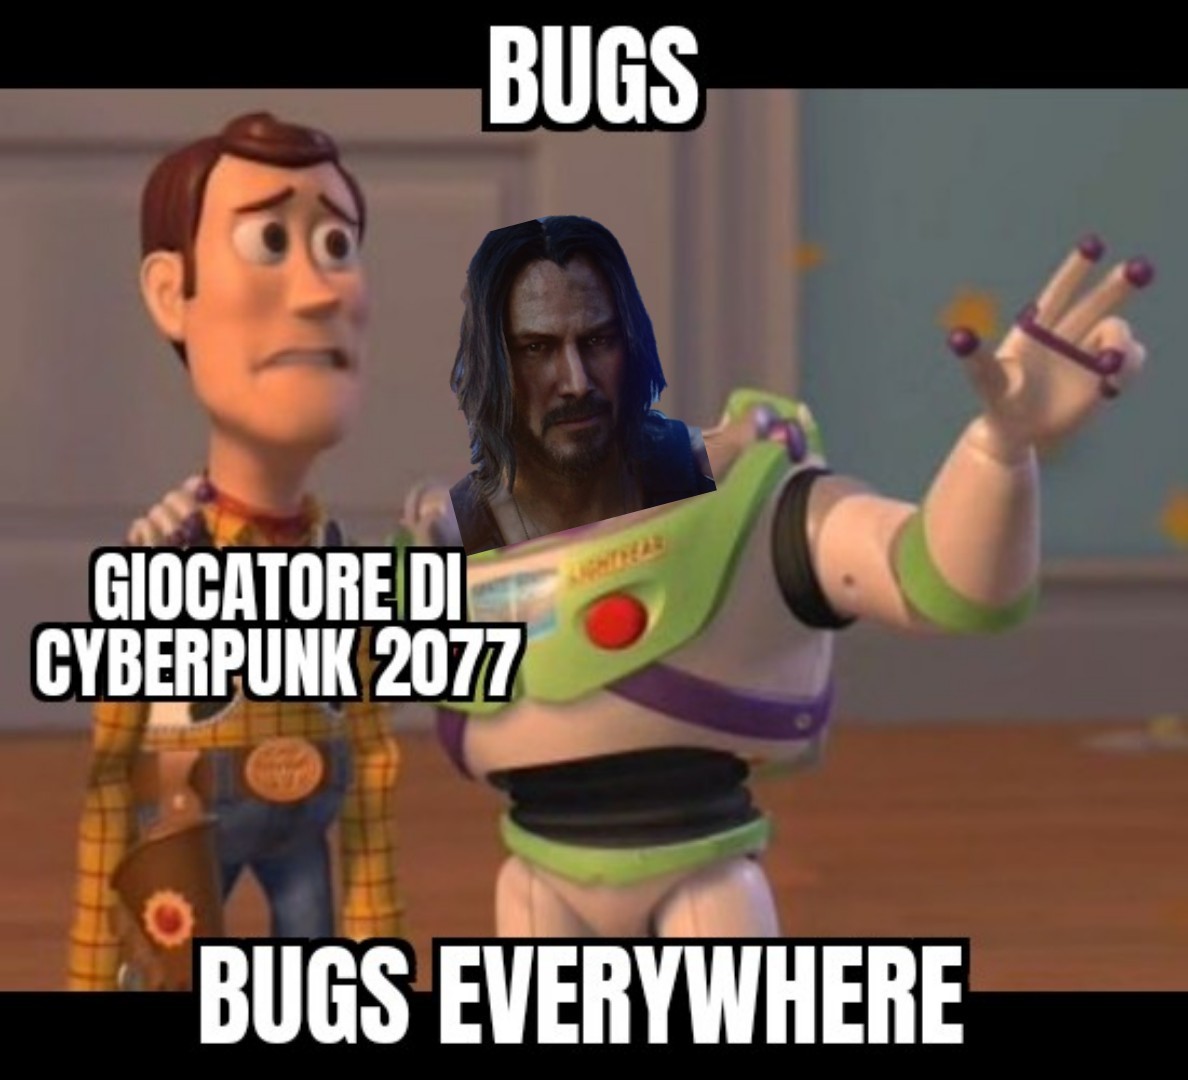 Cyberbugs 2077 - meme